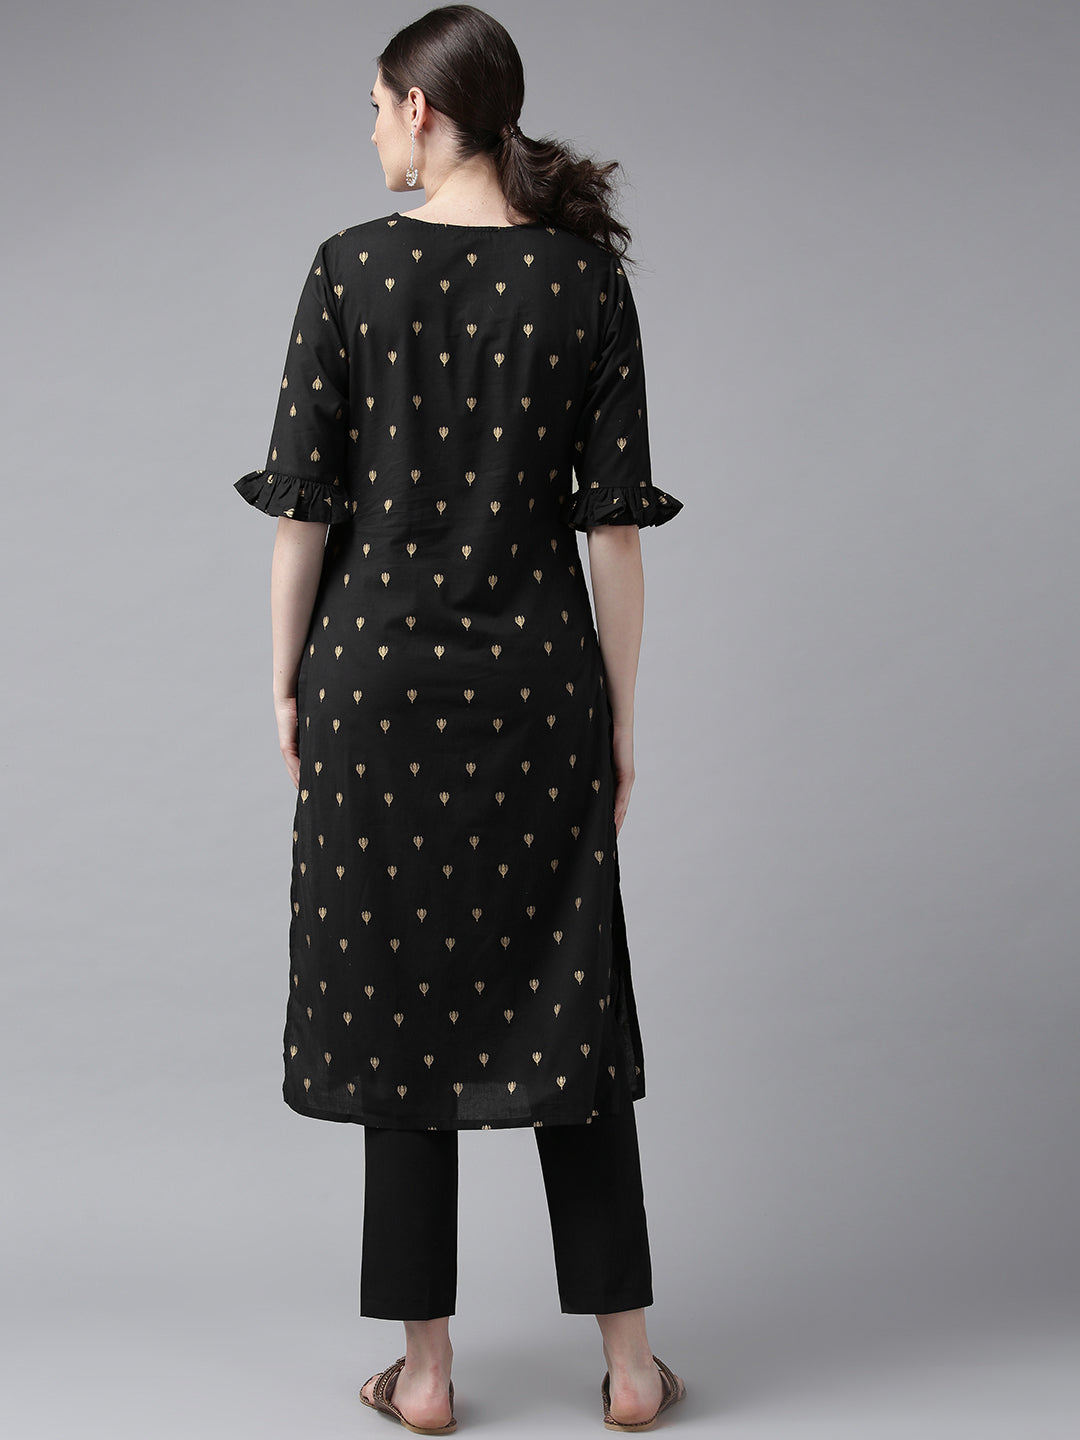 Stylish Polka Dot Print Kurti Design || Dress Design in Dots Print || Polka  Dots Outfit Idea - YouTube